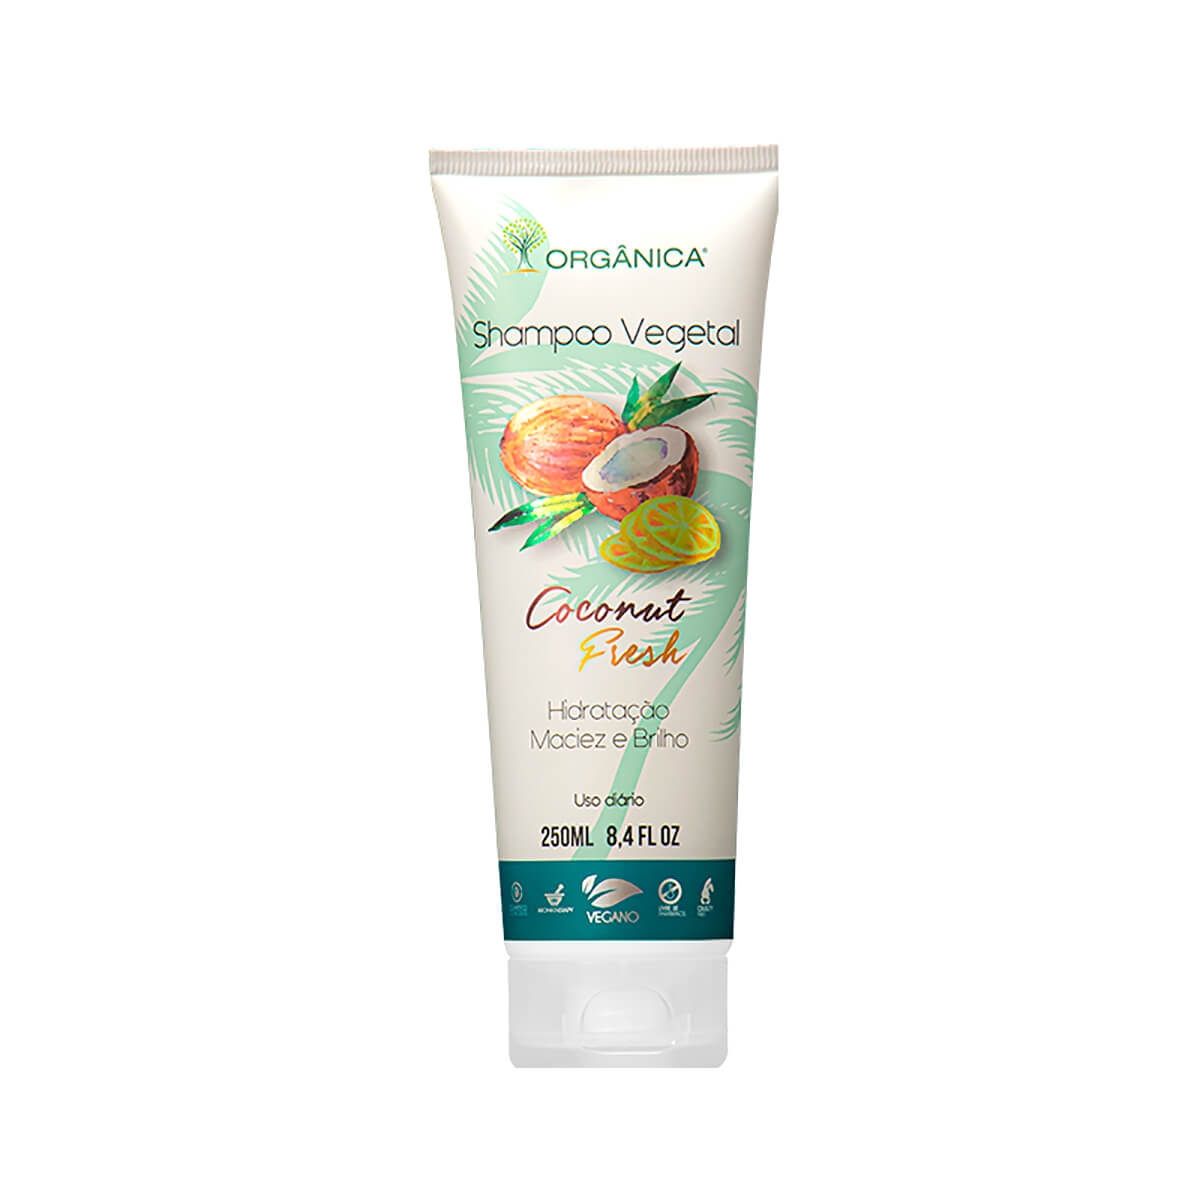 Shampoo Vegetal Orgânica Coconut Fresh 250ml